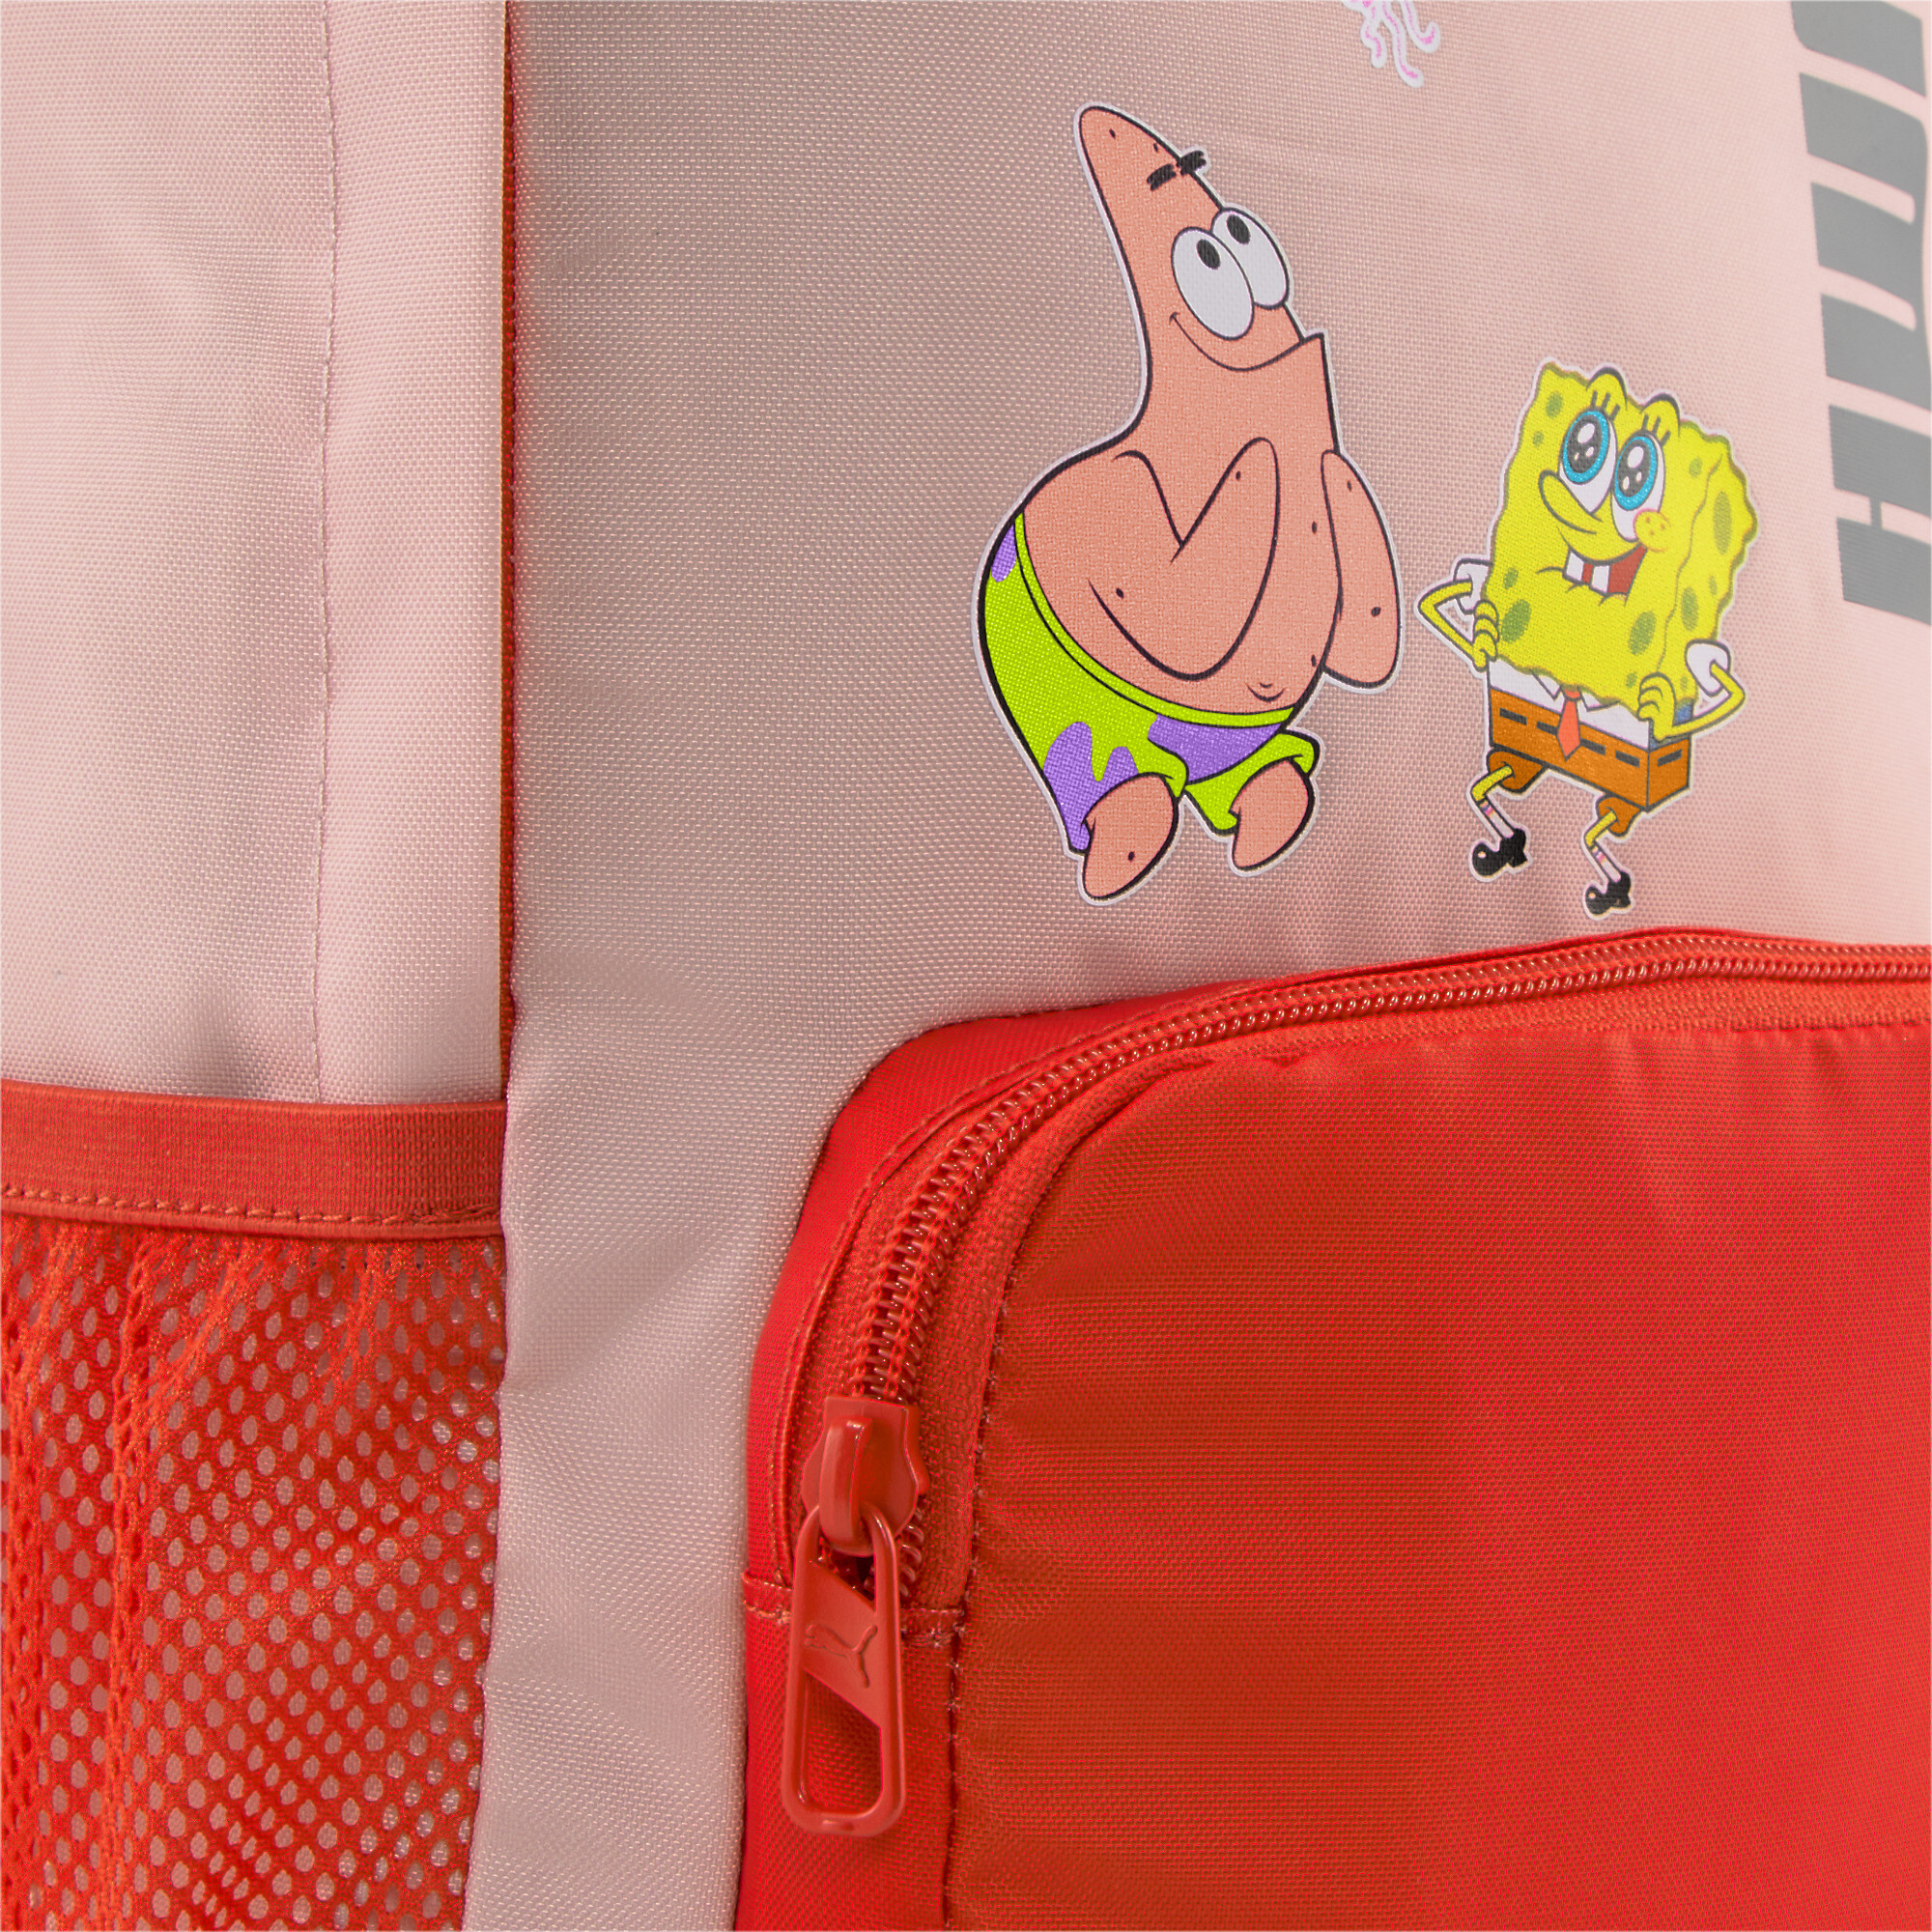 Puma X SPONGEBOB Backpack, Pink, Accessories